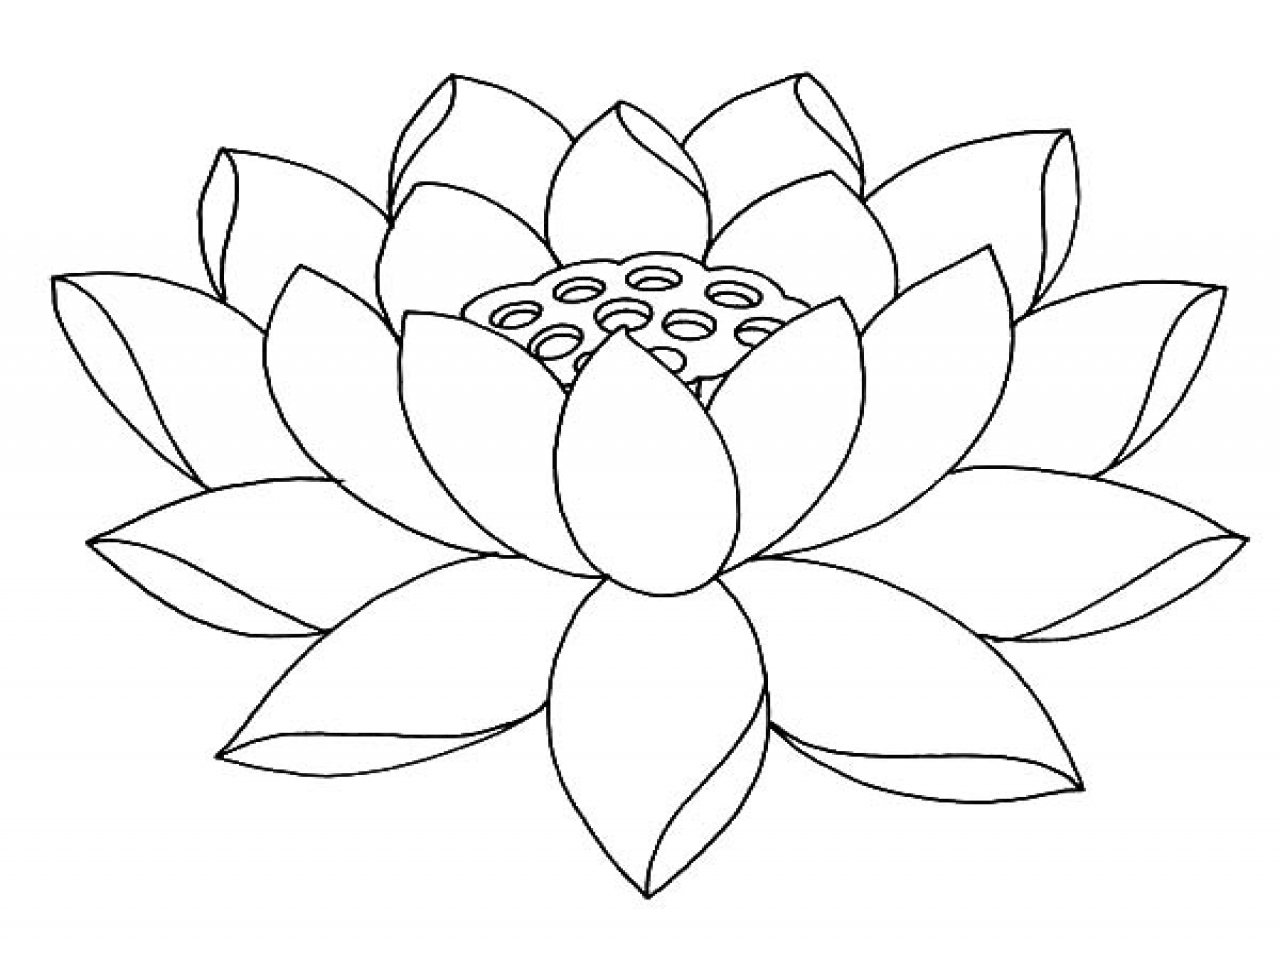 Lotus Flower Coloring Page at GetColorings.com | Free printable